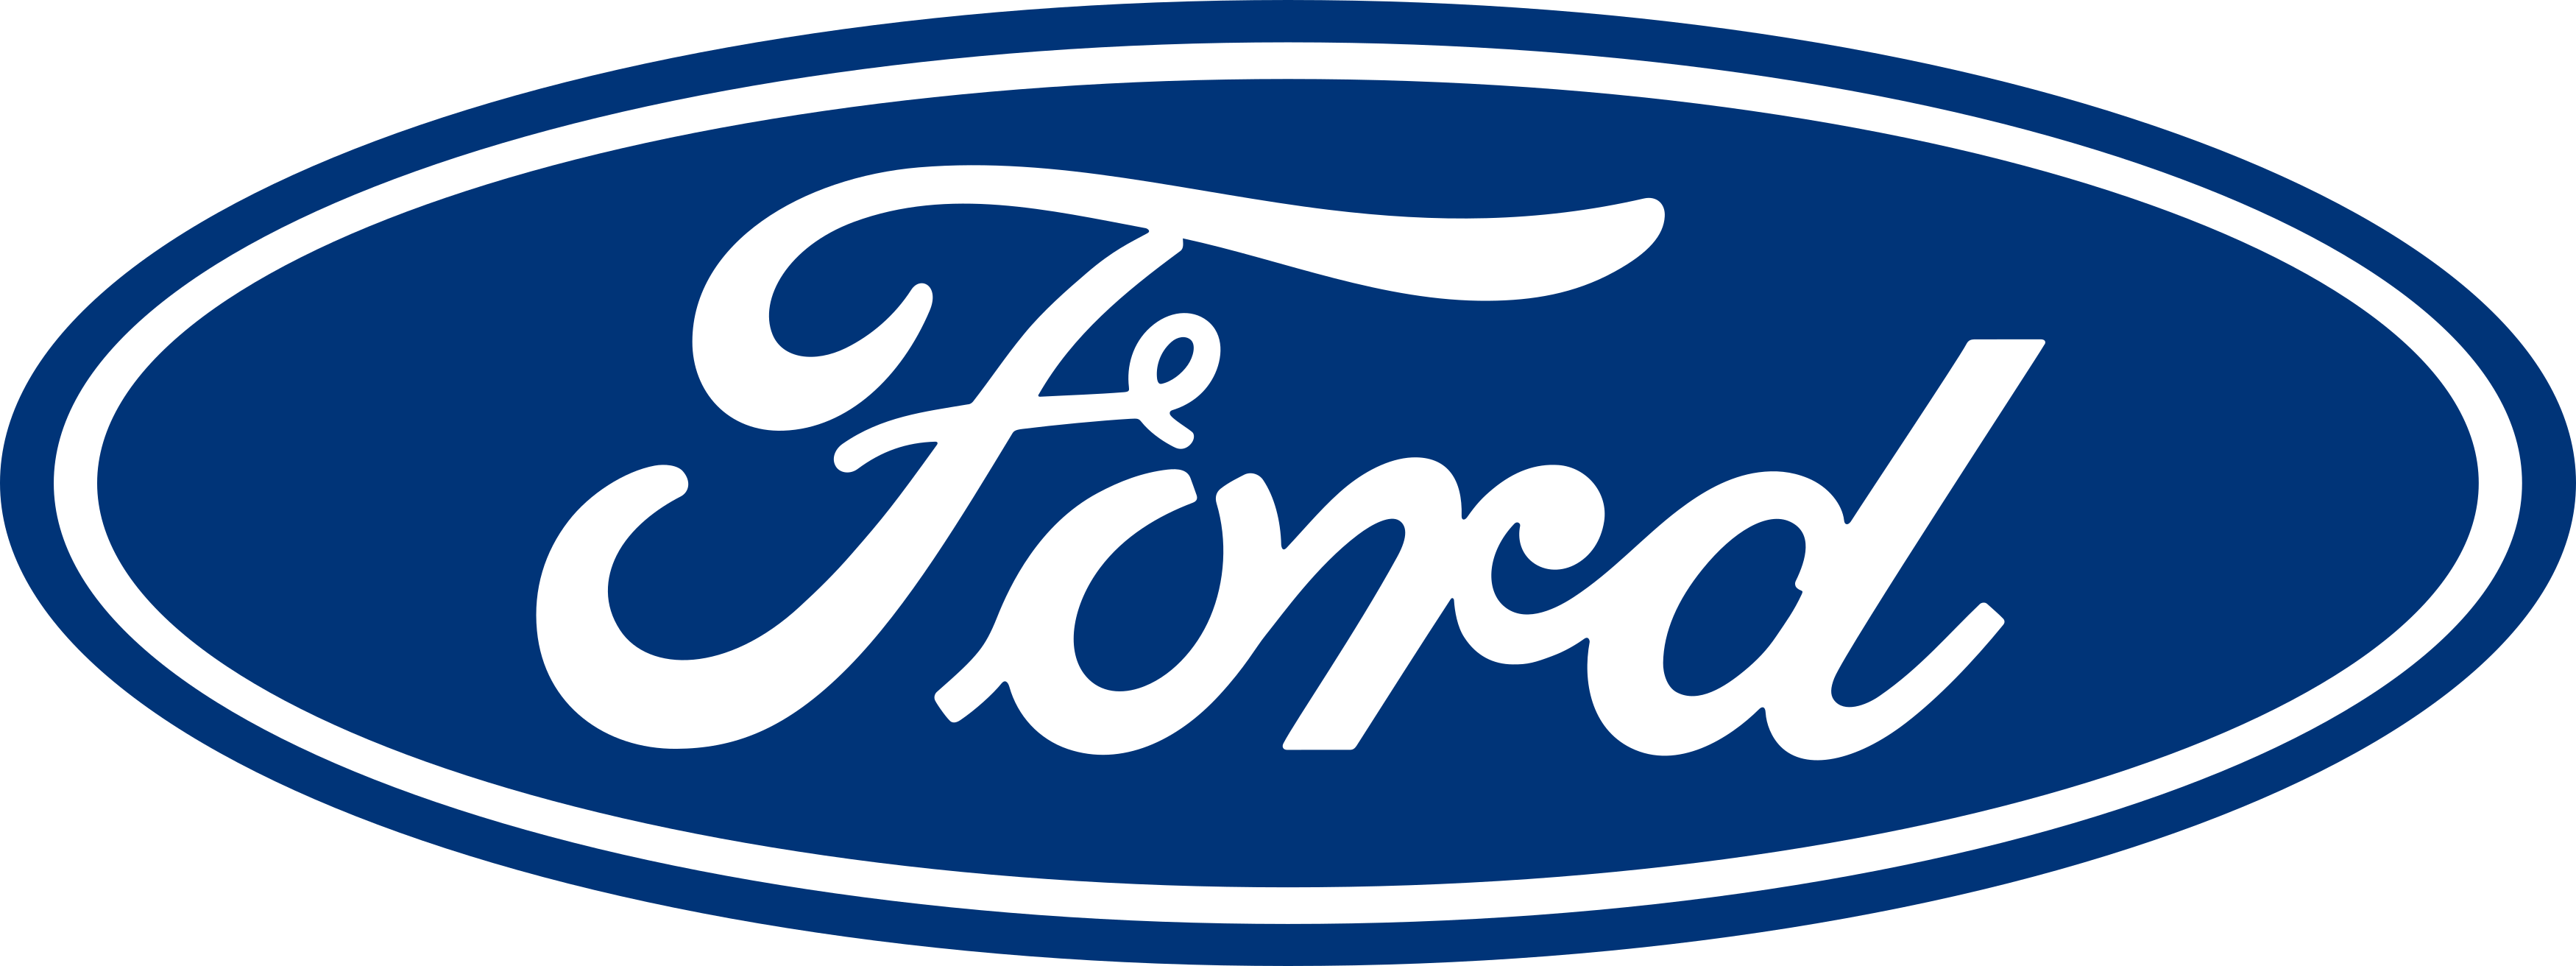 Ford-logo-png-file - Event Pr